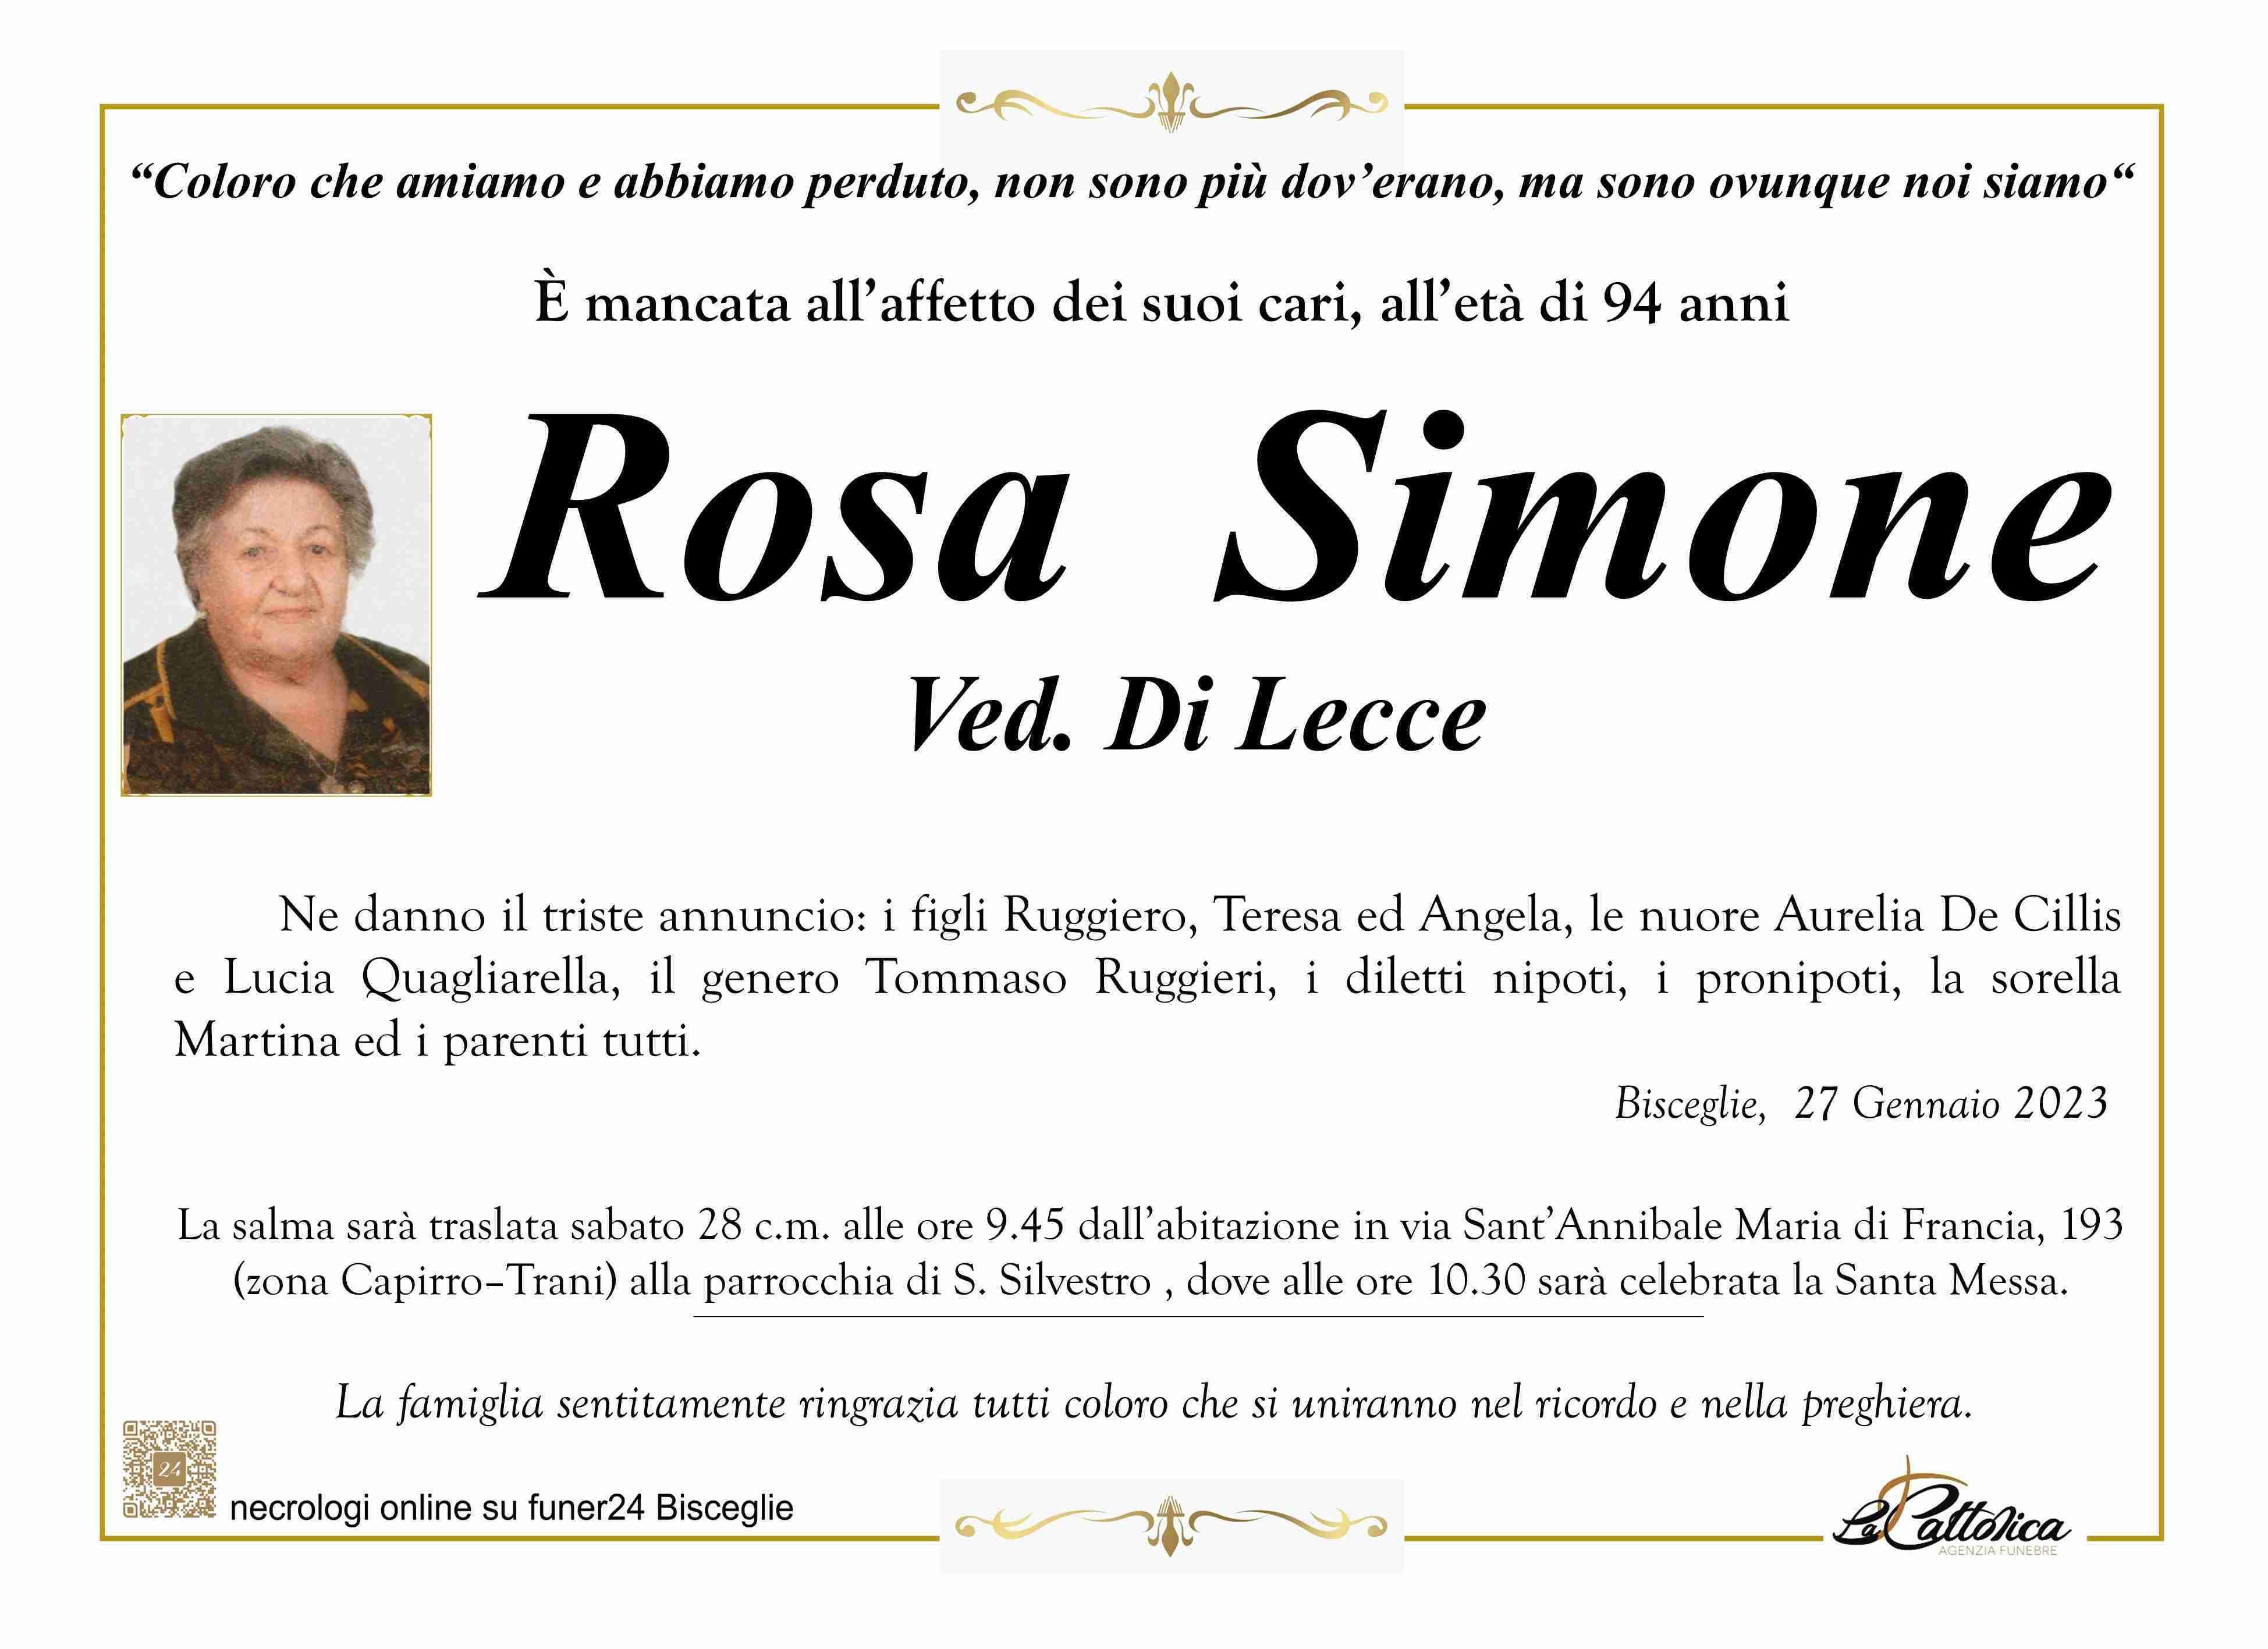 Rosa Simone